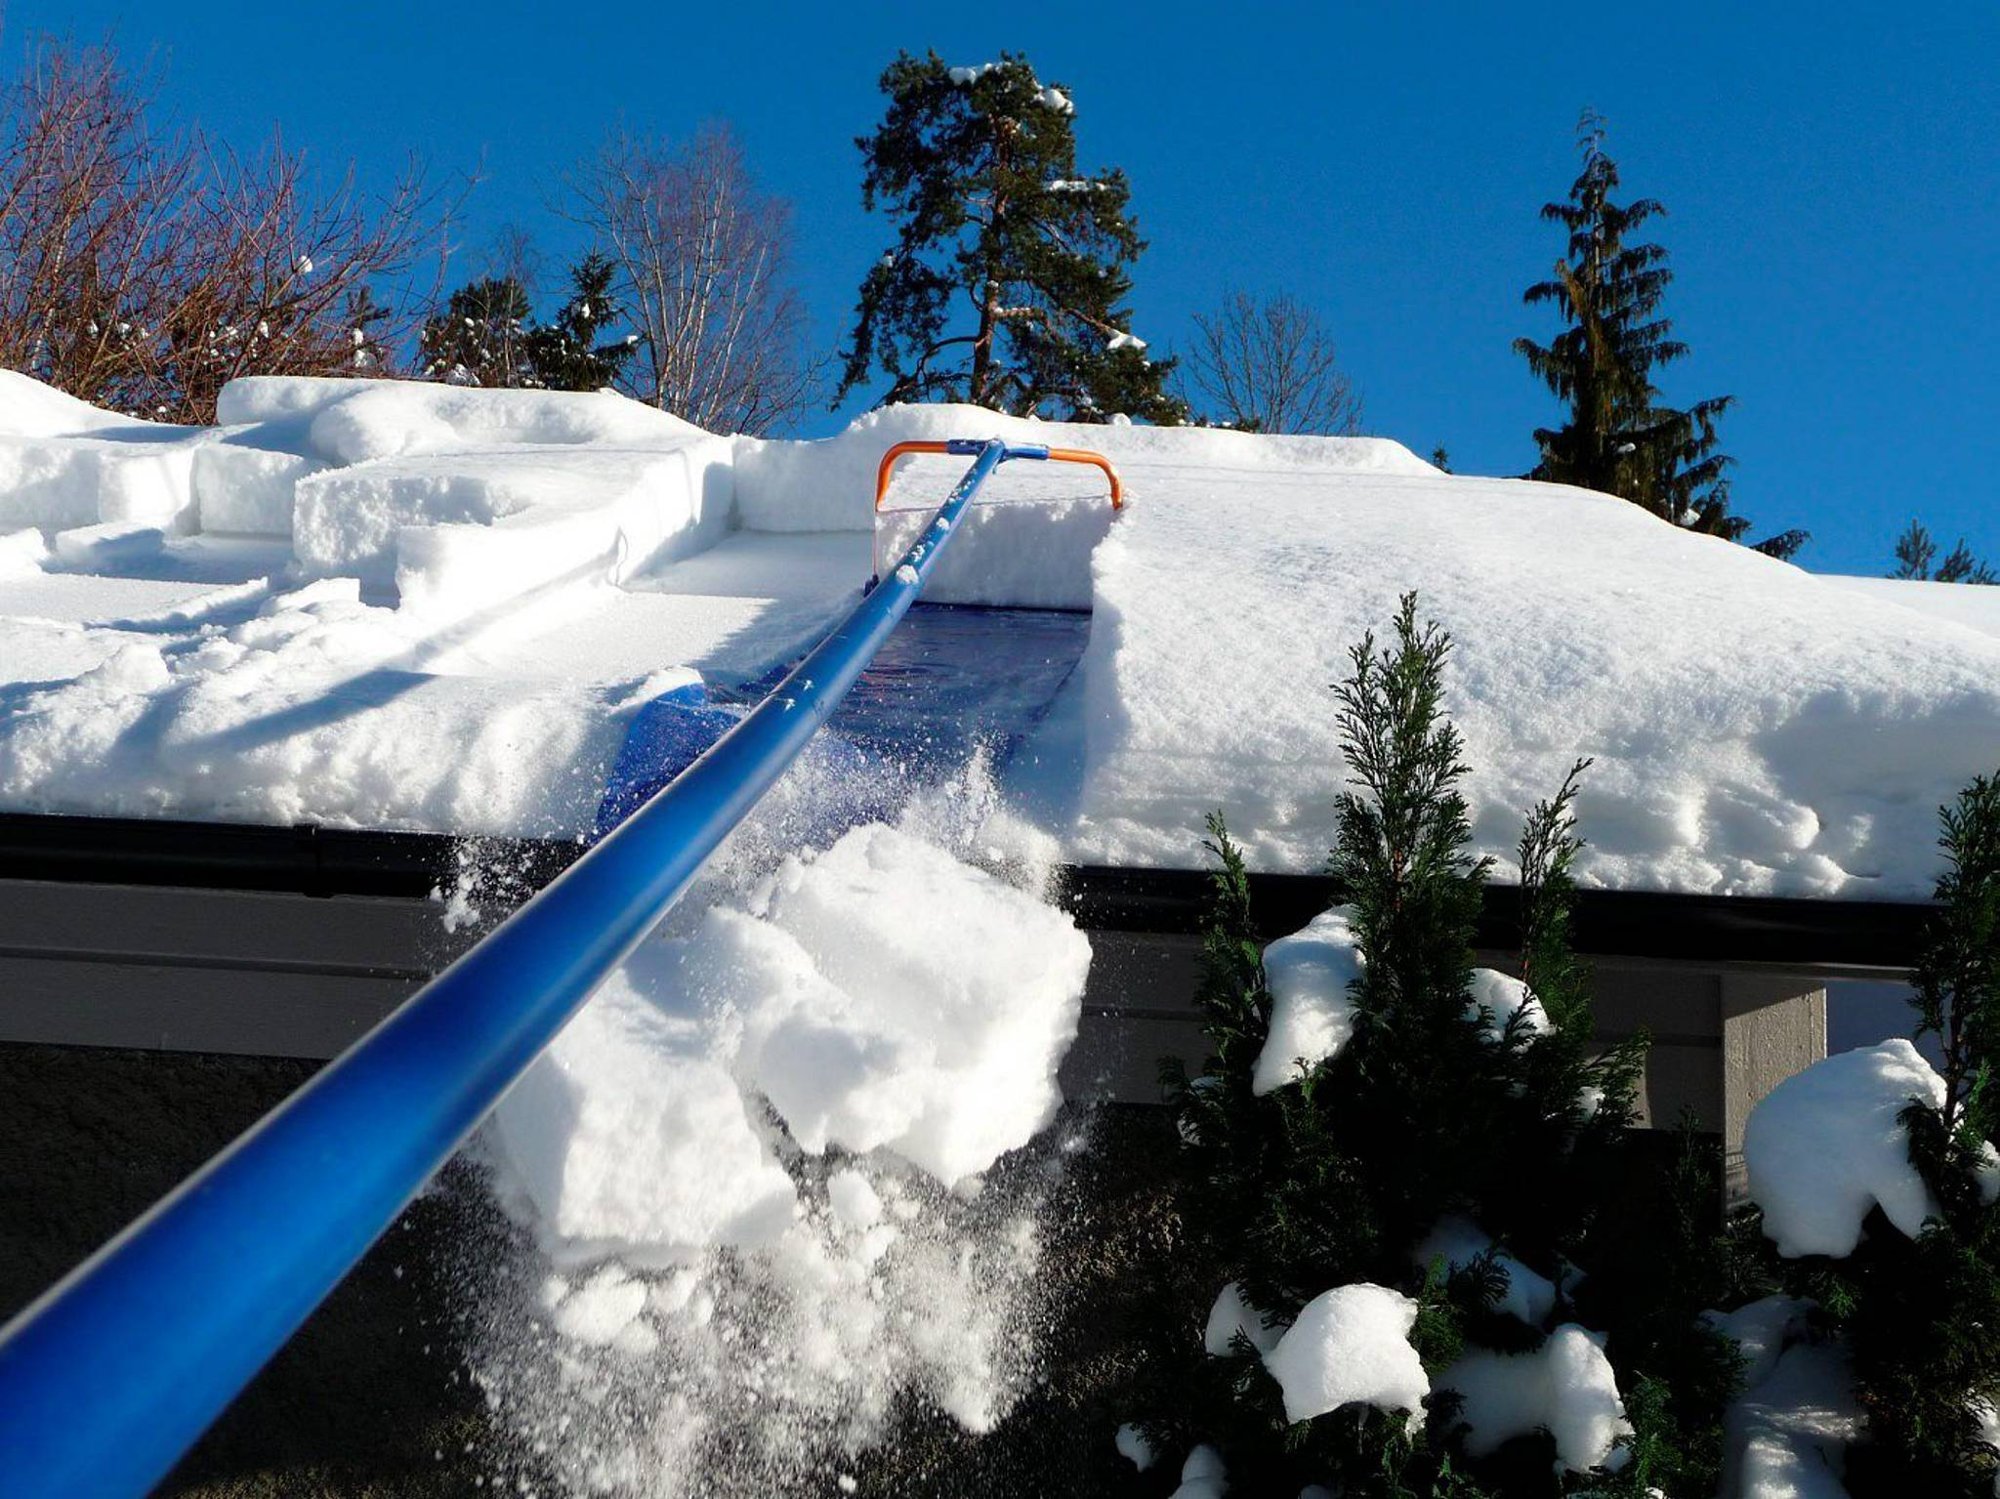 Очистка дома от снега. Скребок для уборки снега с крыши с тканью 1,9-6,3м 11646. Скребок для уборки снега с крыши с тканью 1,9-6,3м 11646 дракон. Скребок для снега с крыши с тканью 1.9-6.3м 11646. Скребок для уборки снега с крыши скрепер с тканью "лавина" 1,9-6,3м 11646.